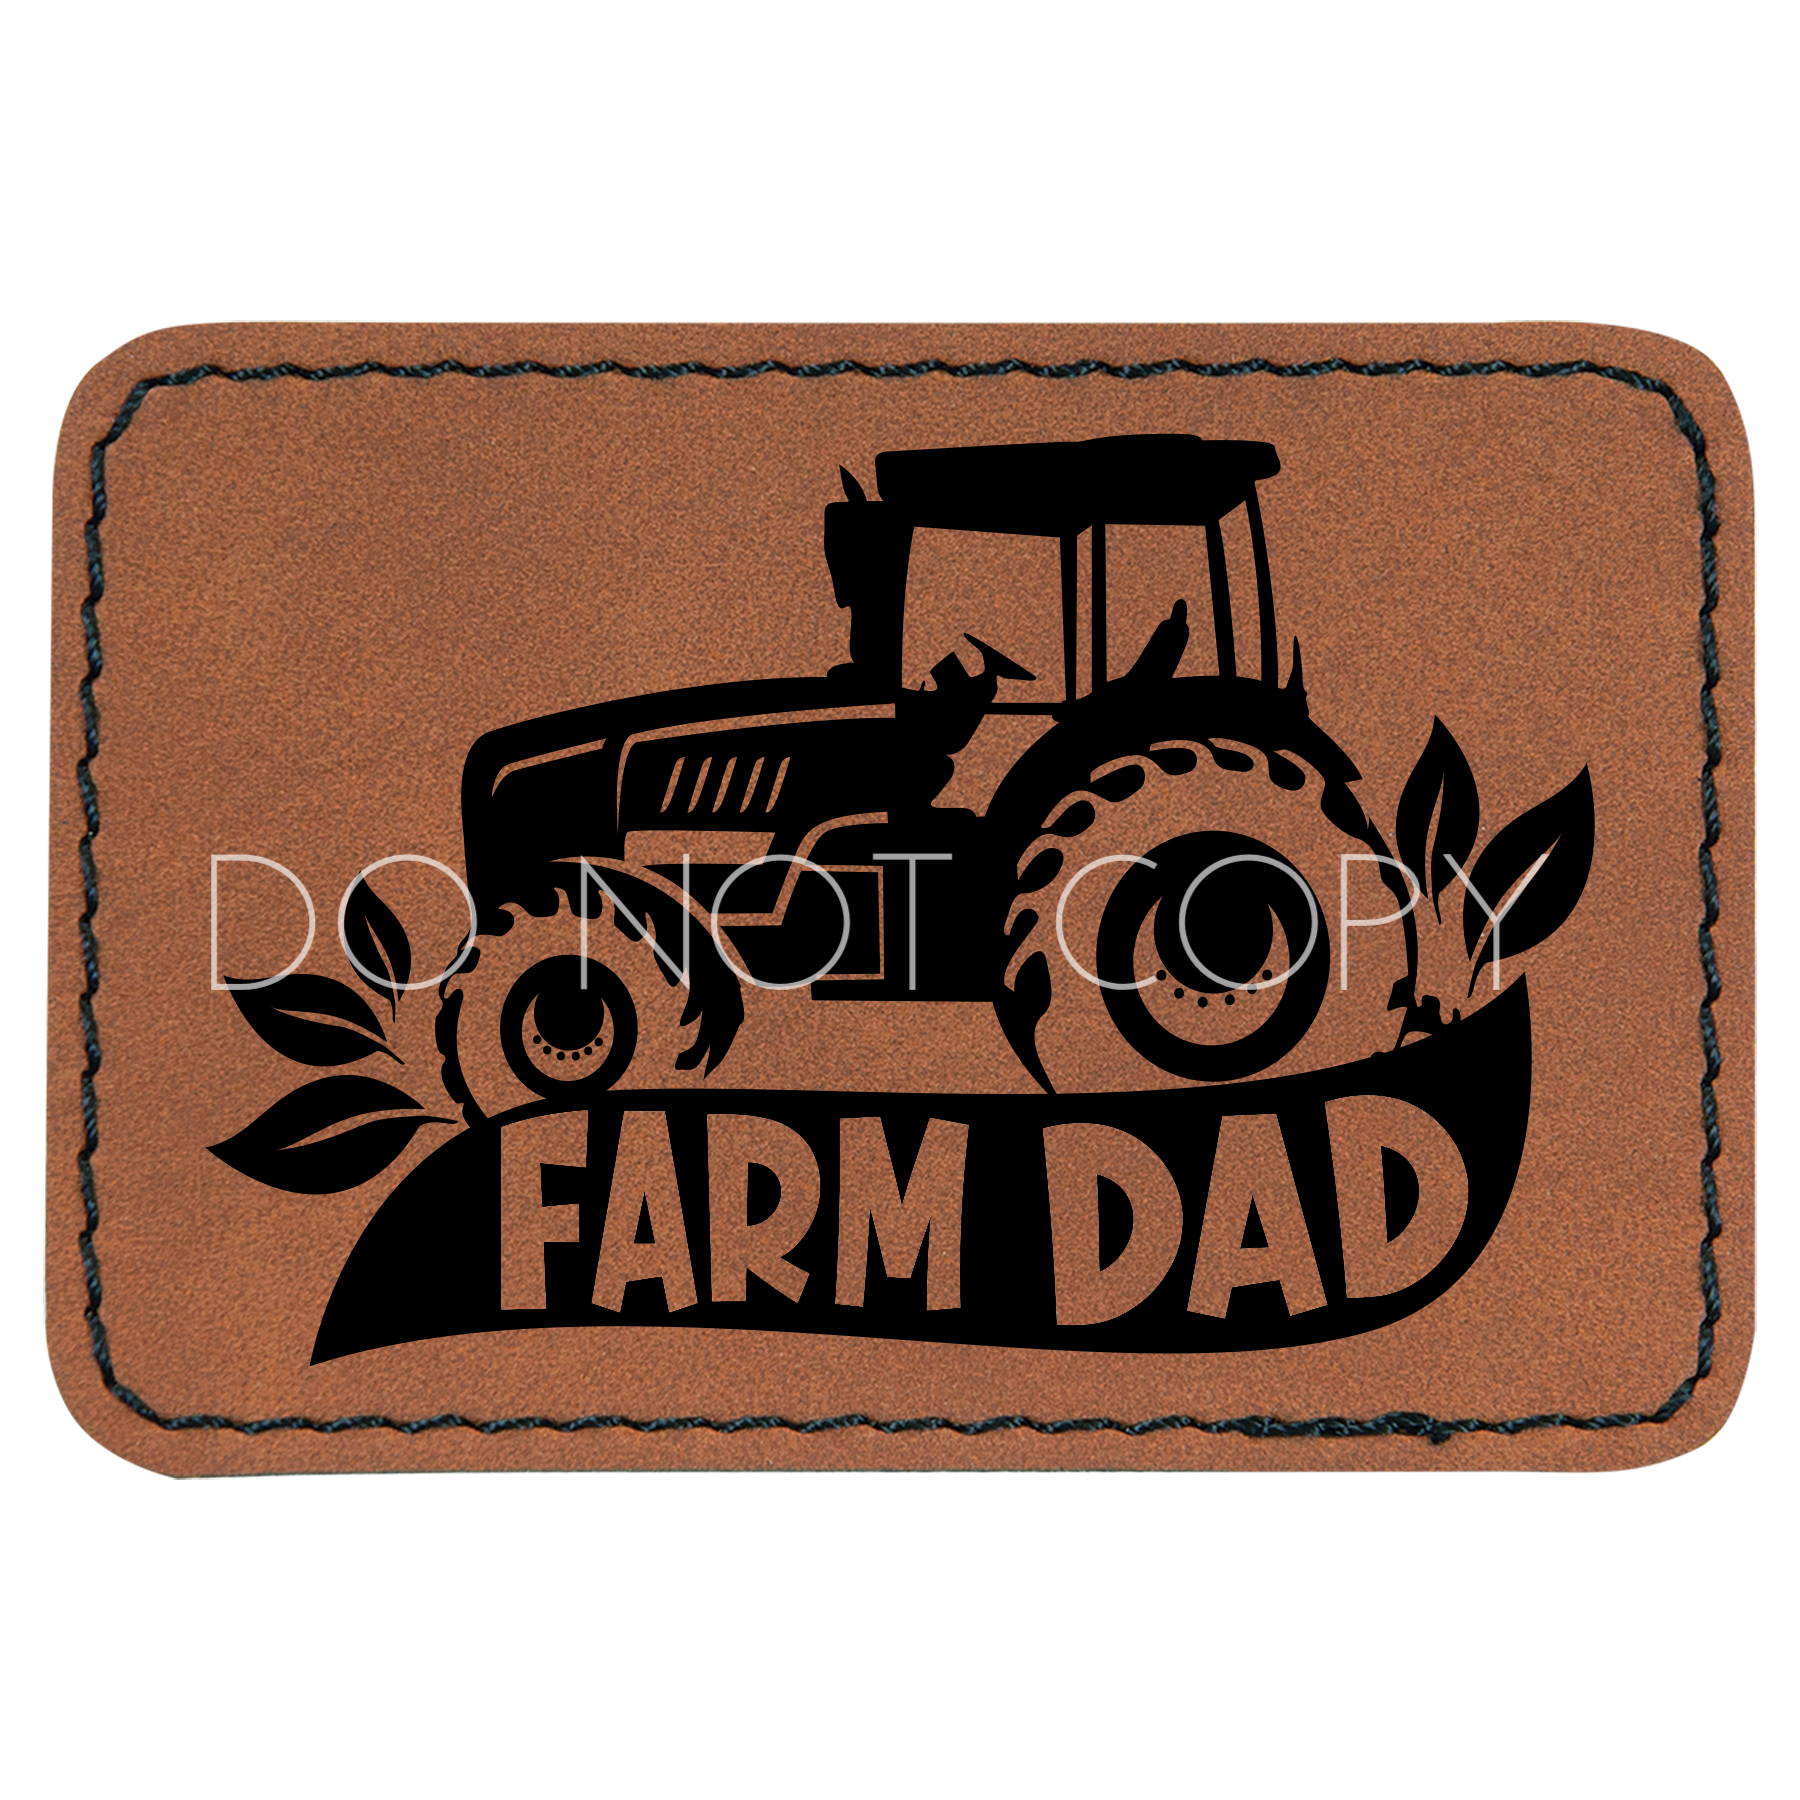 Farm Dad Patch